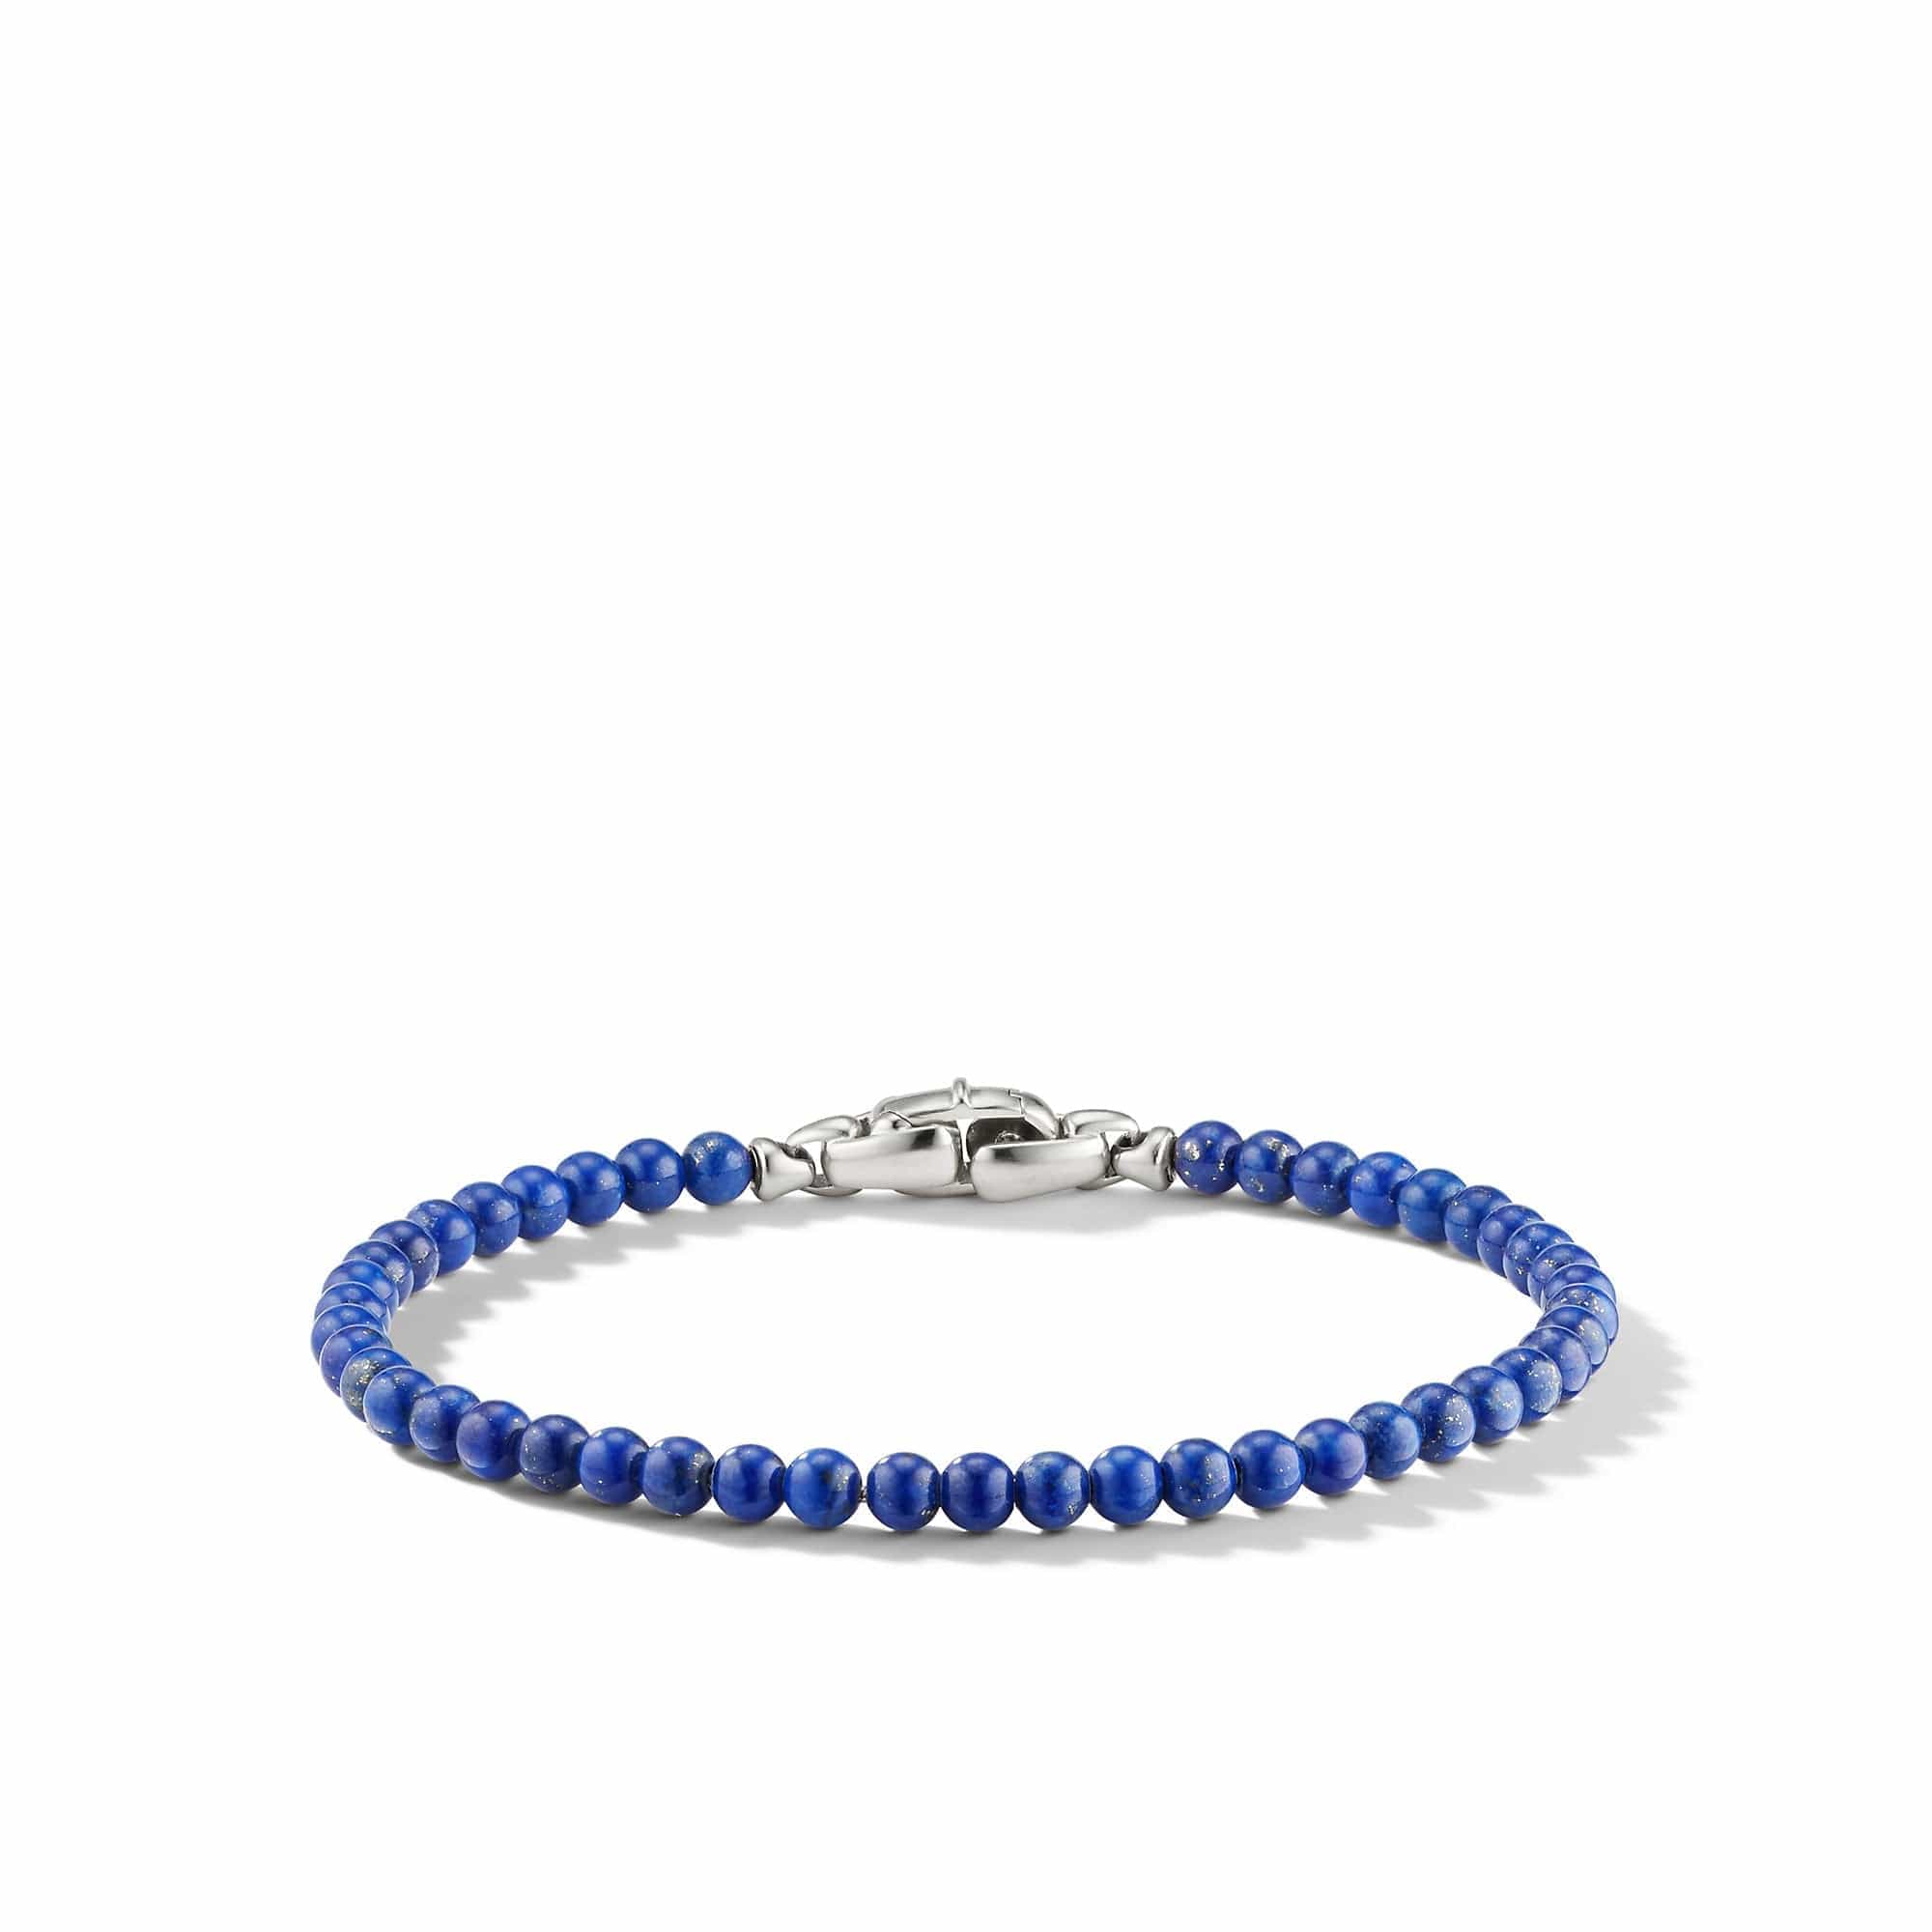 Spiritual Beads Bracelet with Lapis, Long's Jewelers